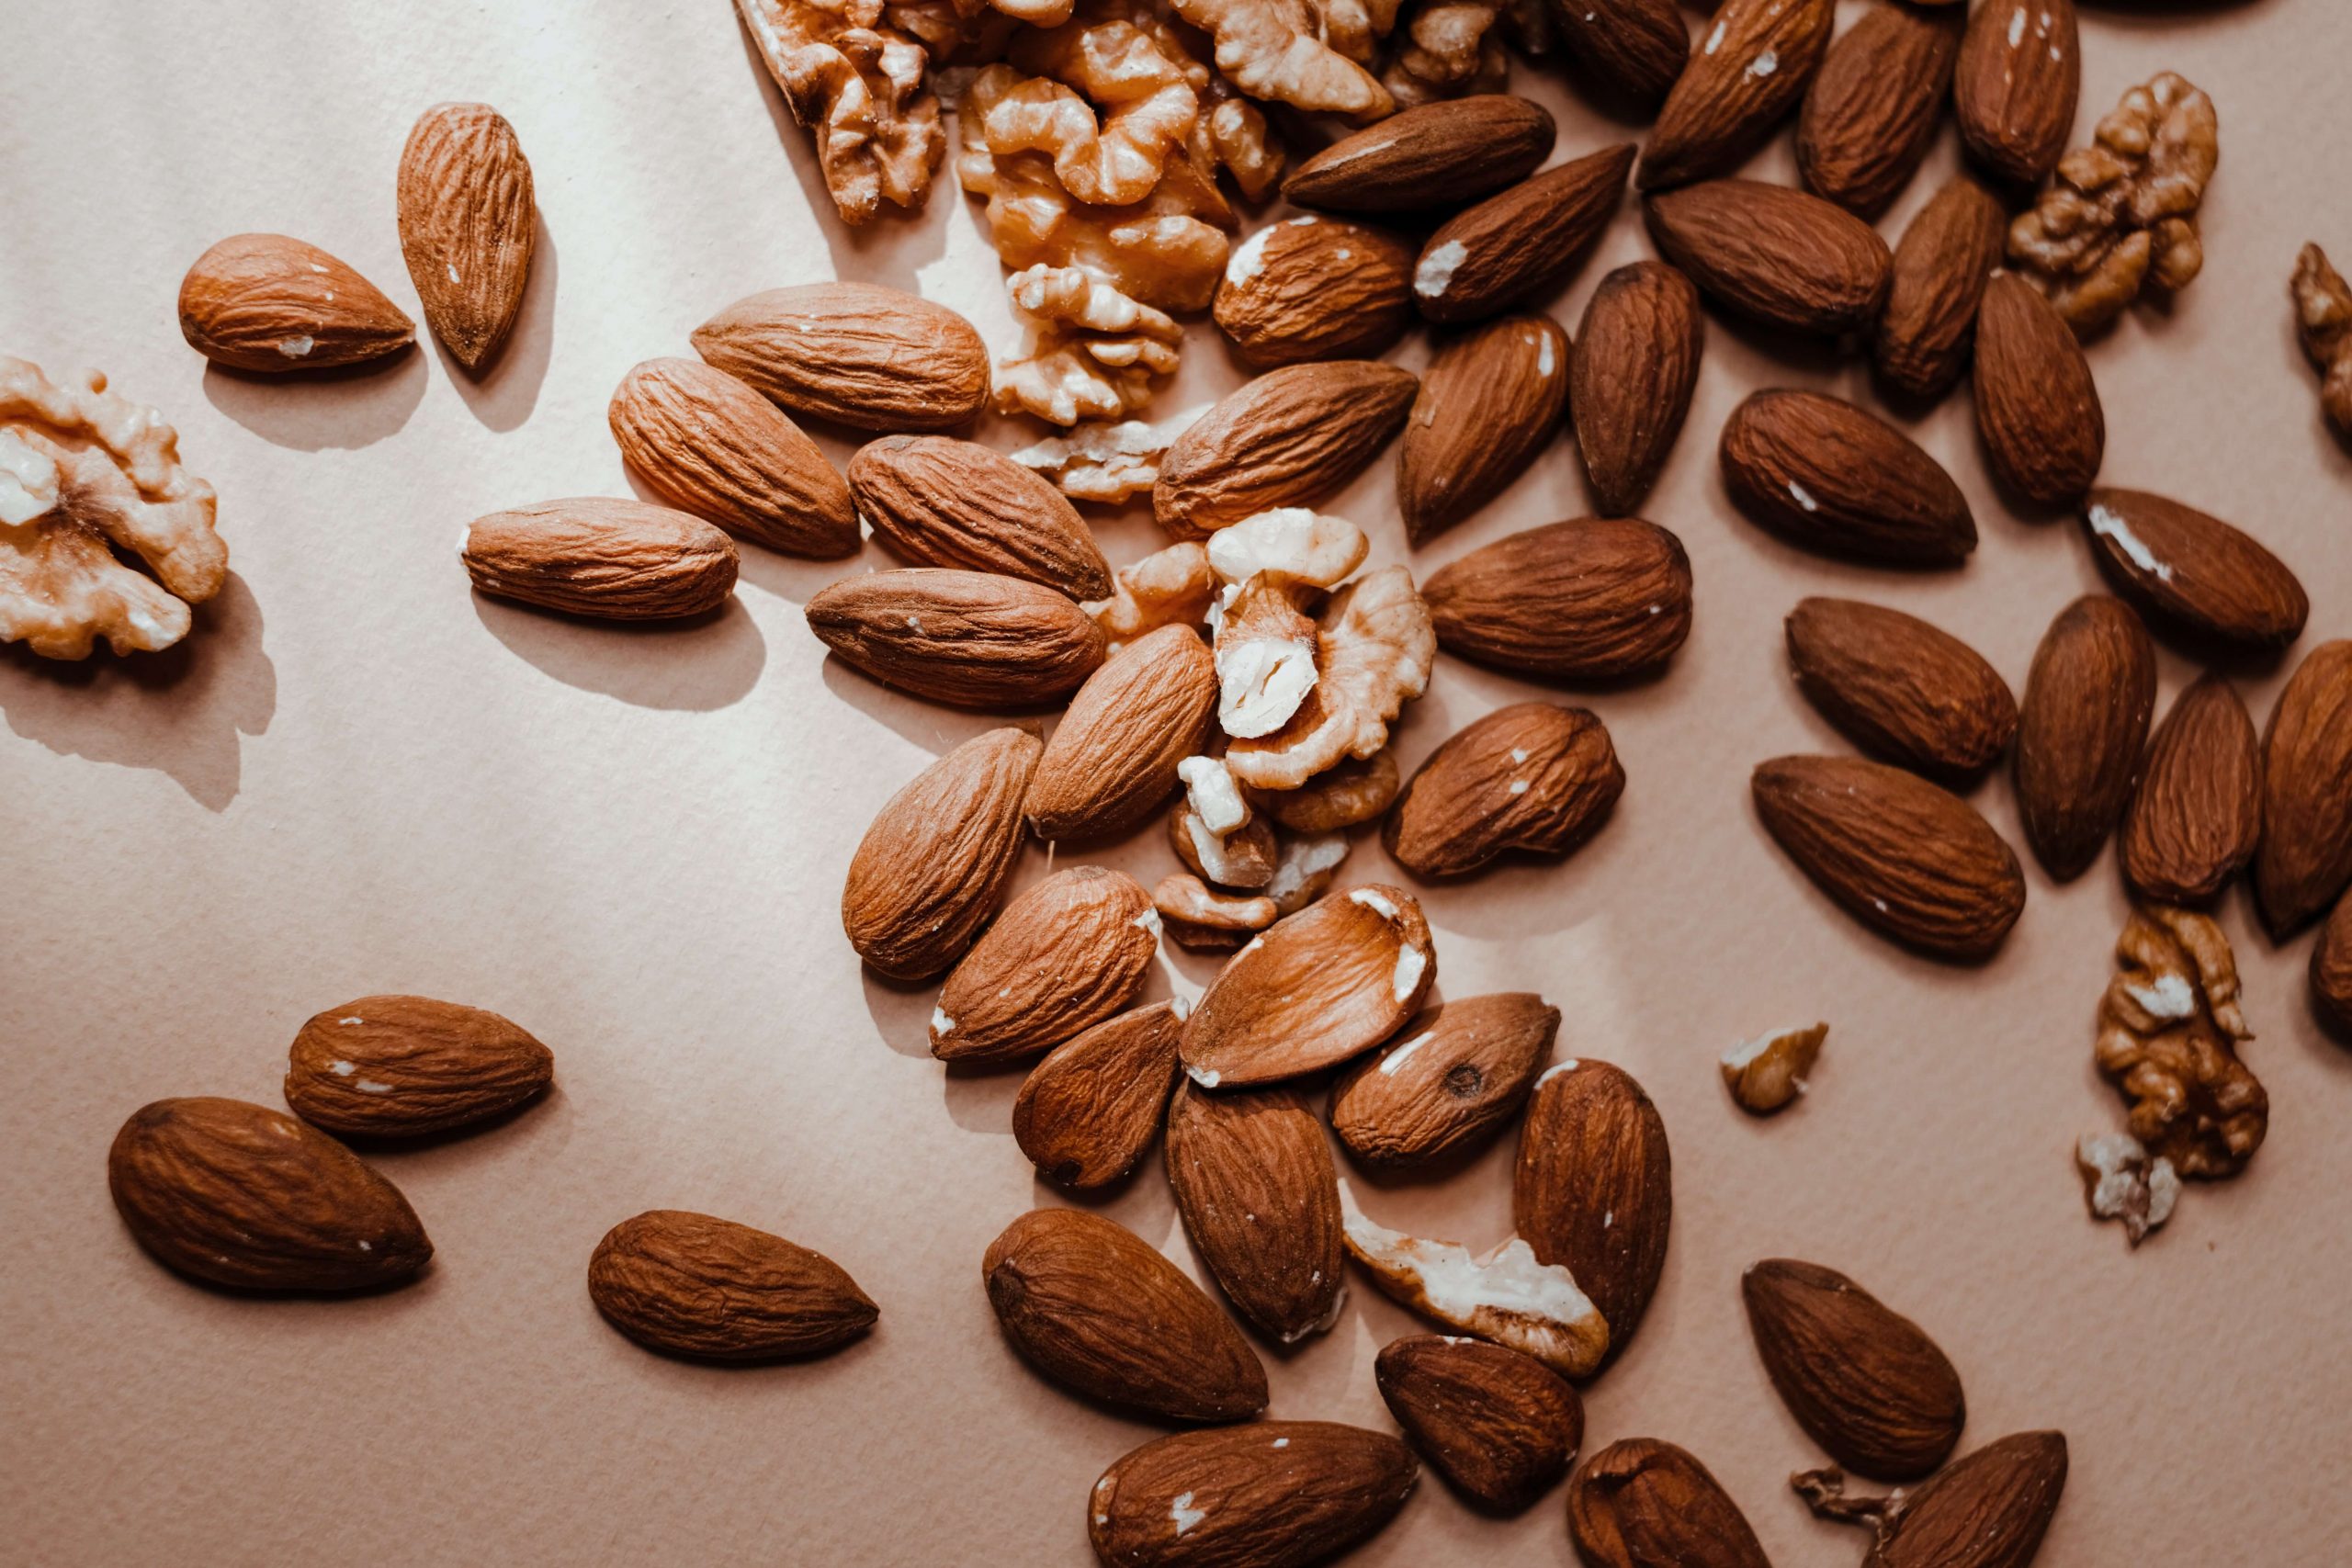 Almond Milk Nutrition Facts